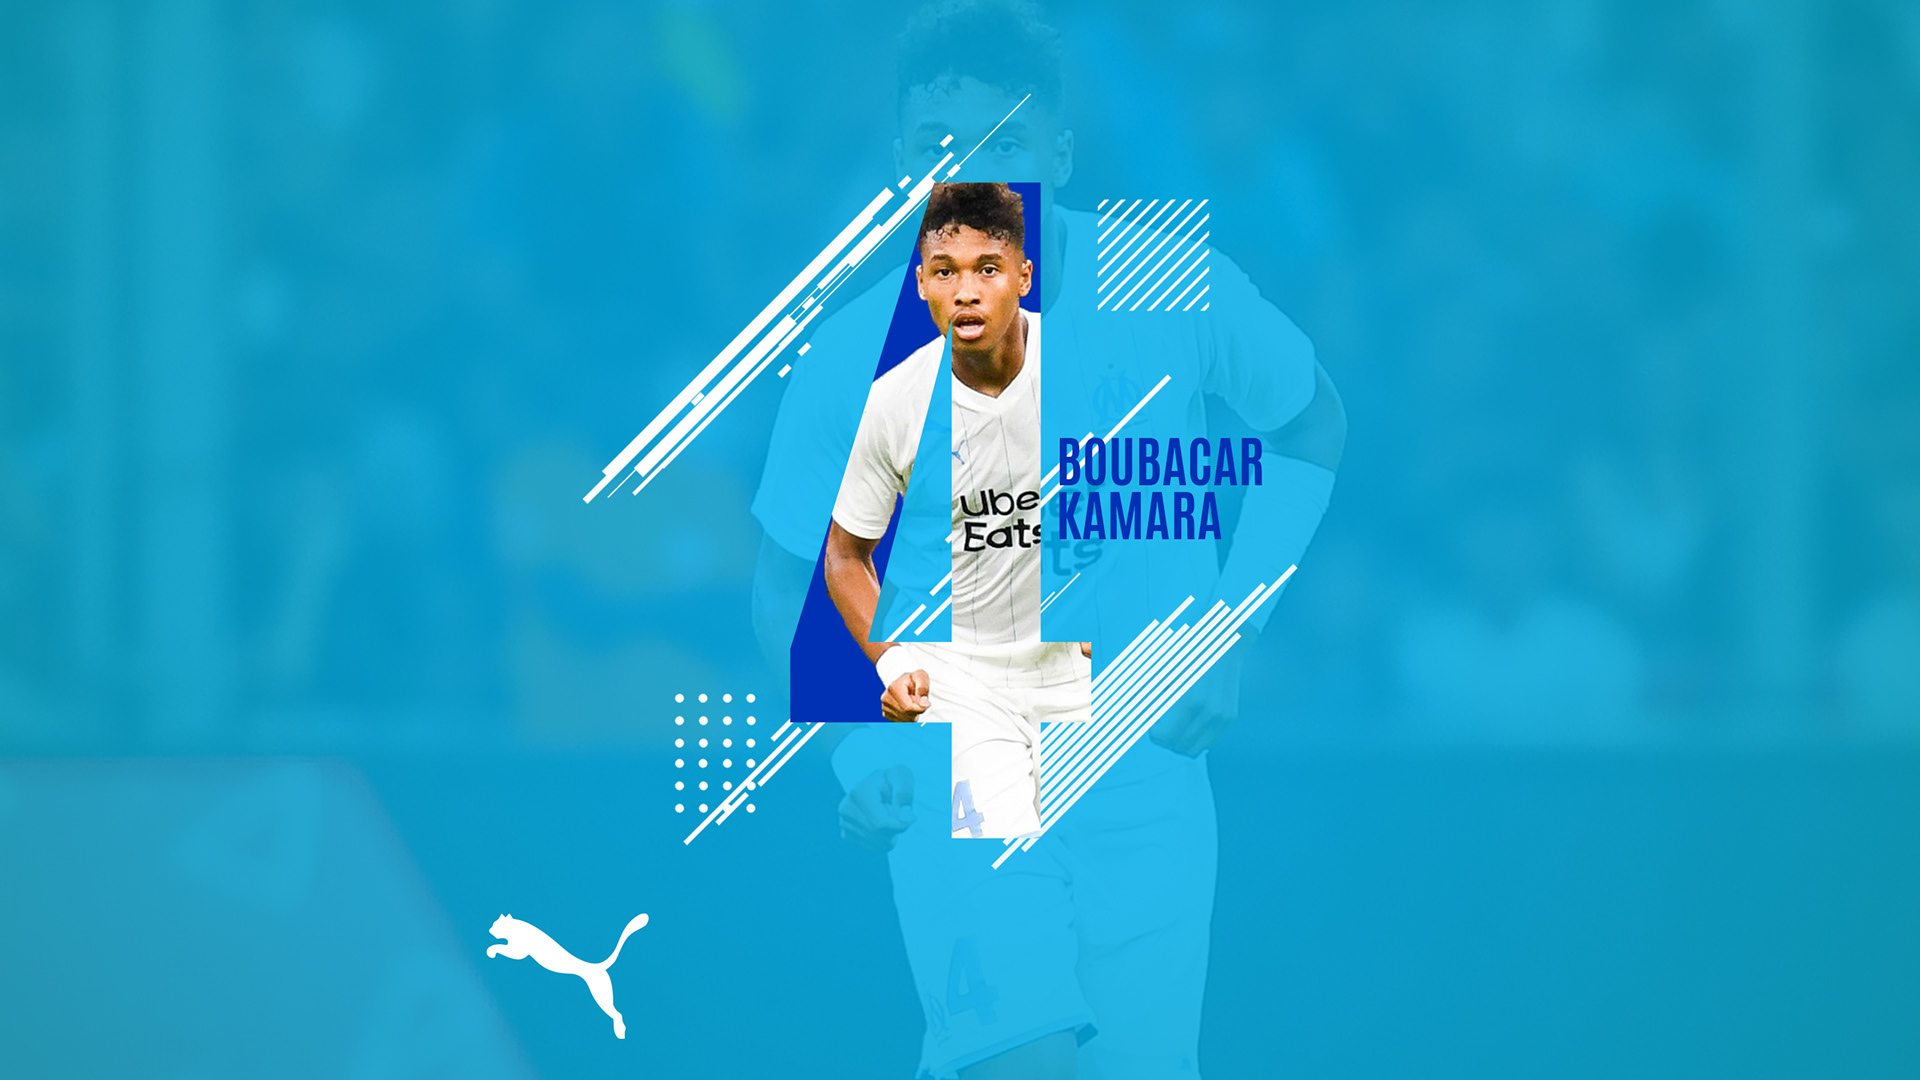 Boubacar Kamara – “Thiago Silva mới” của chủ sân Velodrome